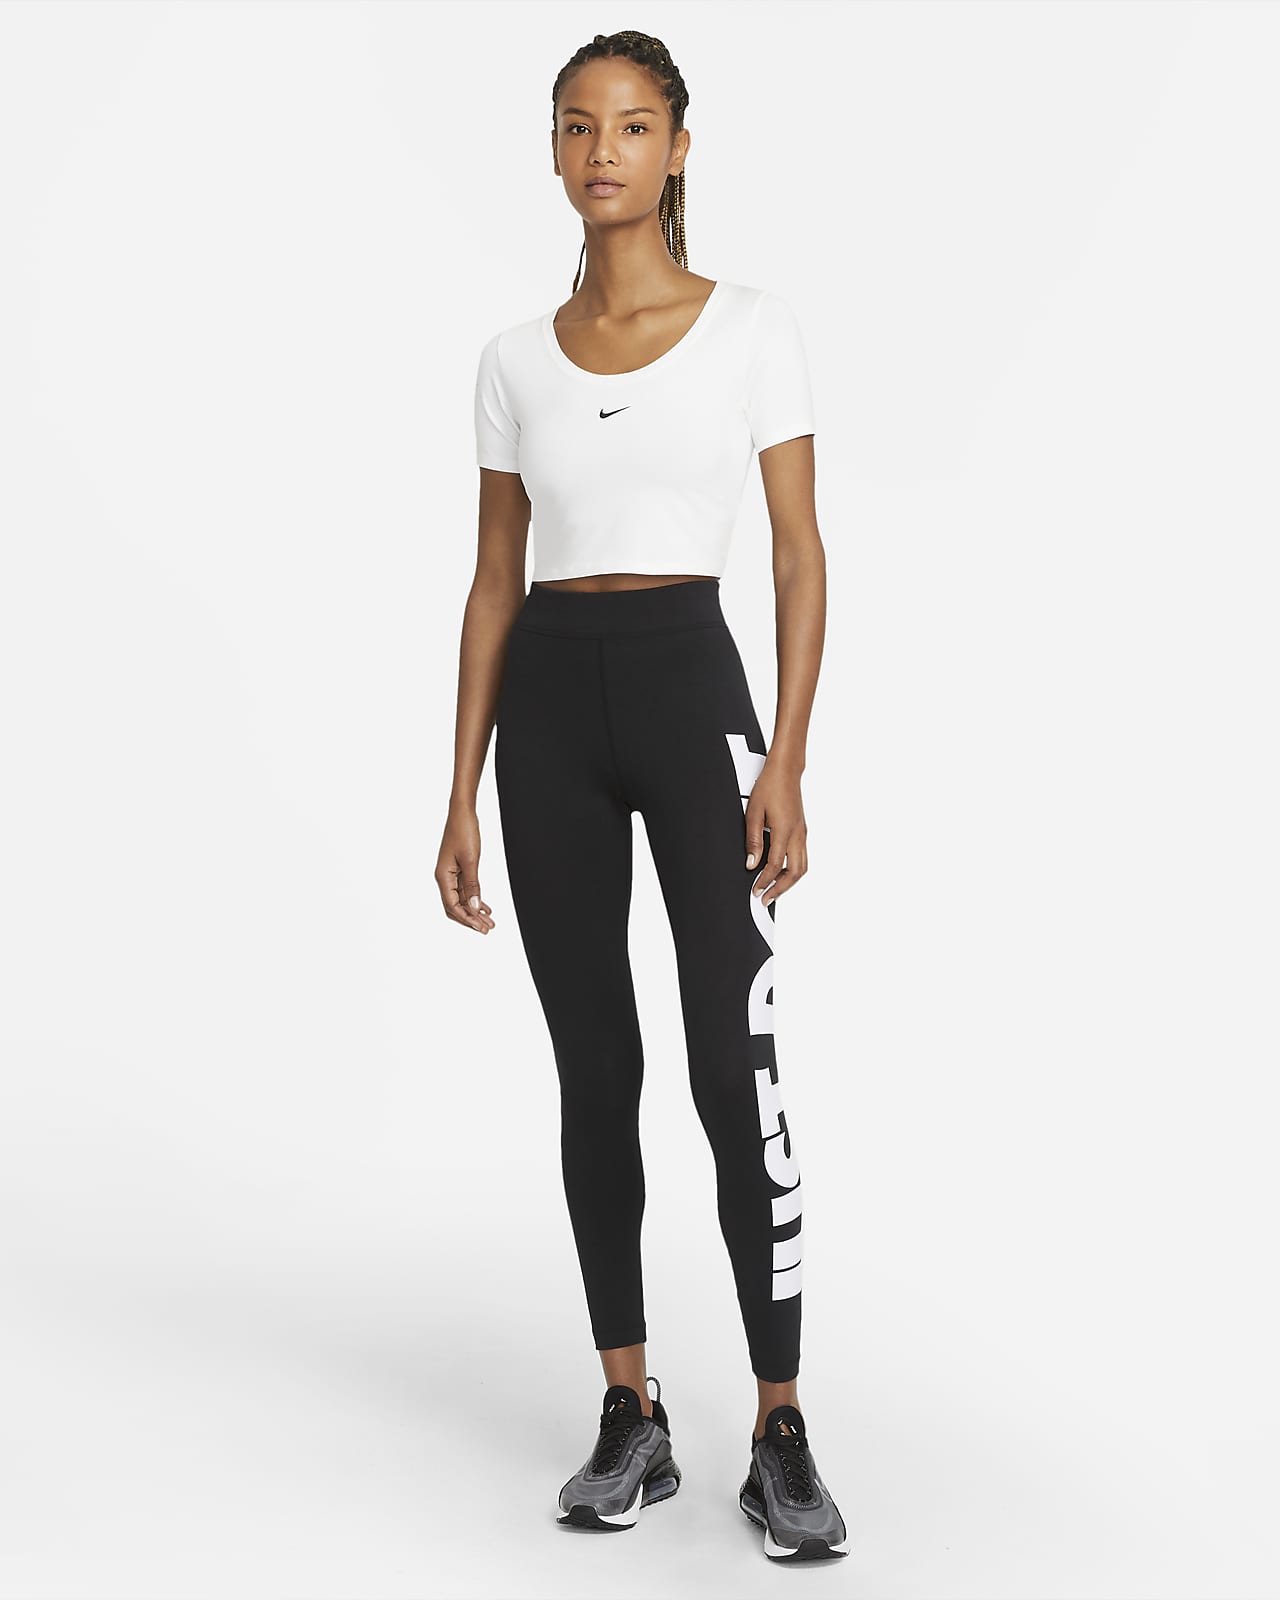 Nike Womens Active Wear Leggings Size L Black/Gold Logo(s)